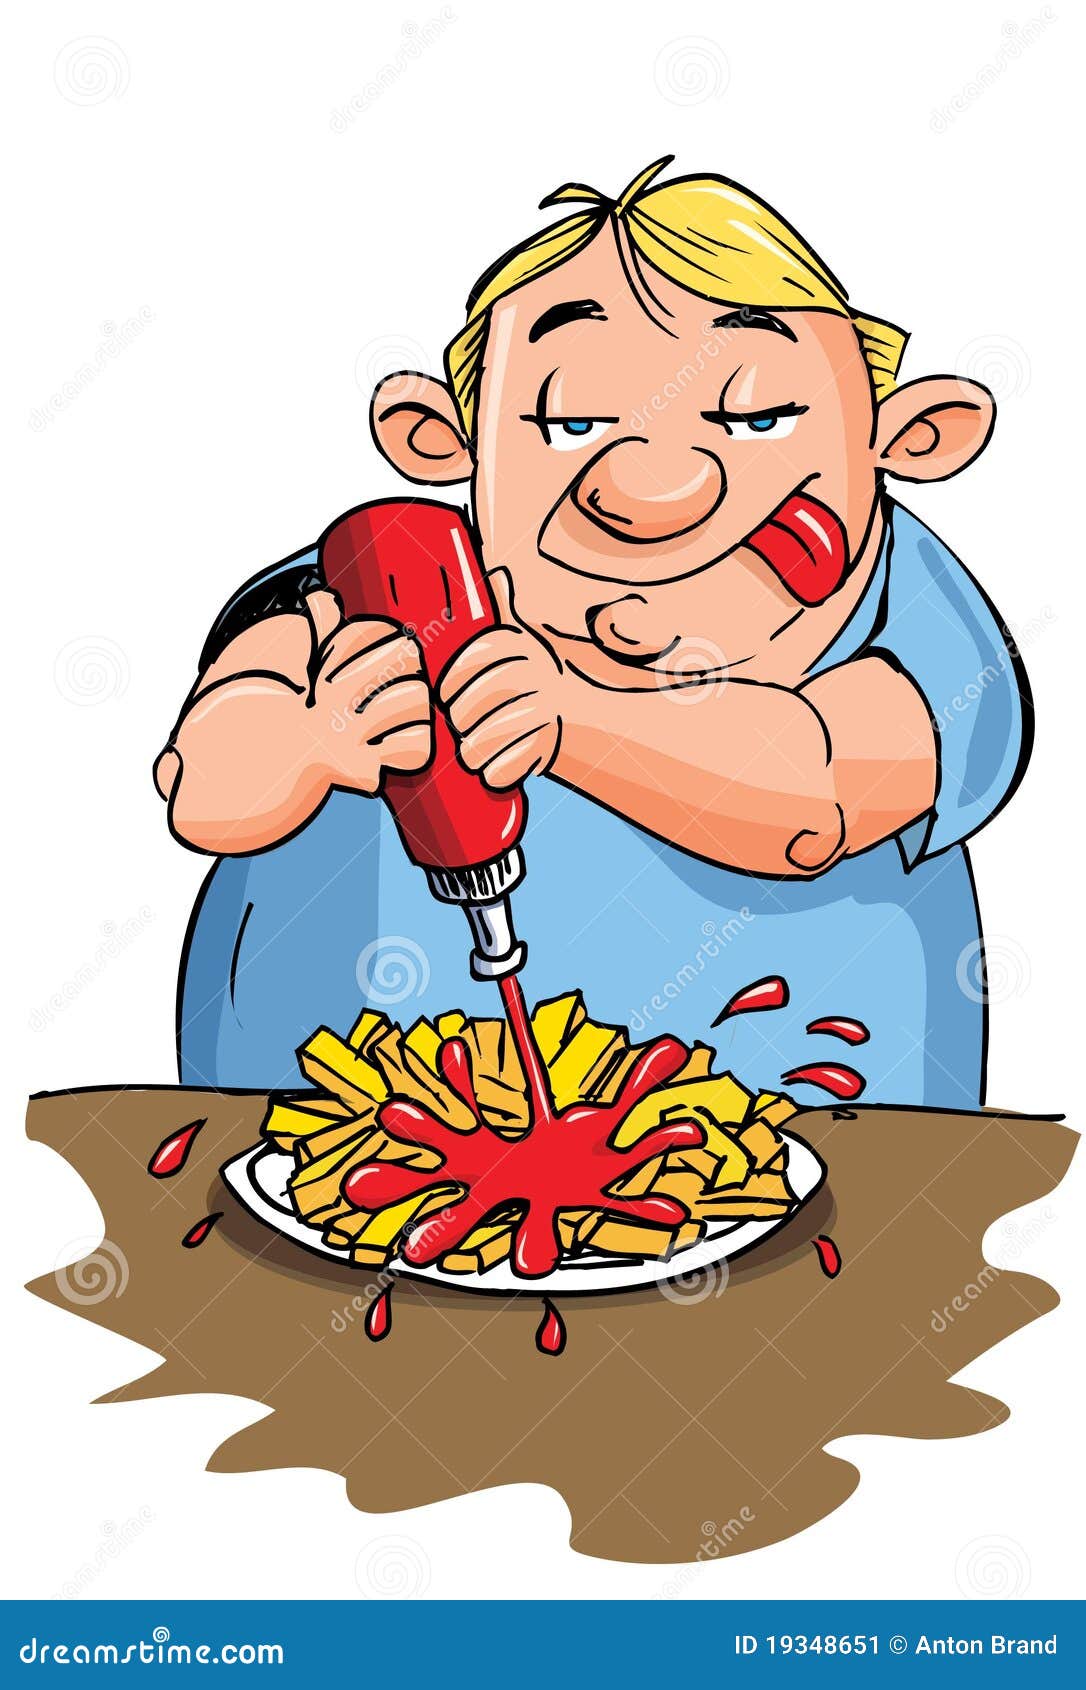 Cartoon Of Overweight Man Eating Stock Image - Image: 19348651